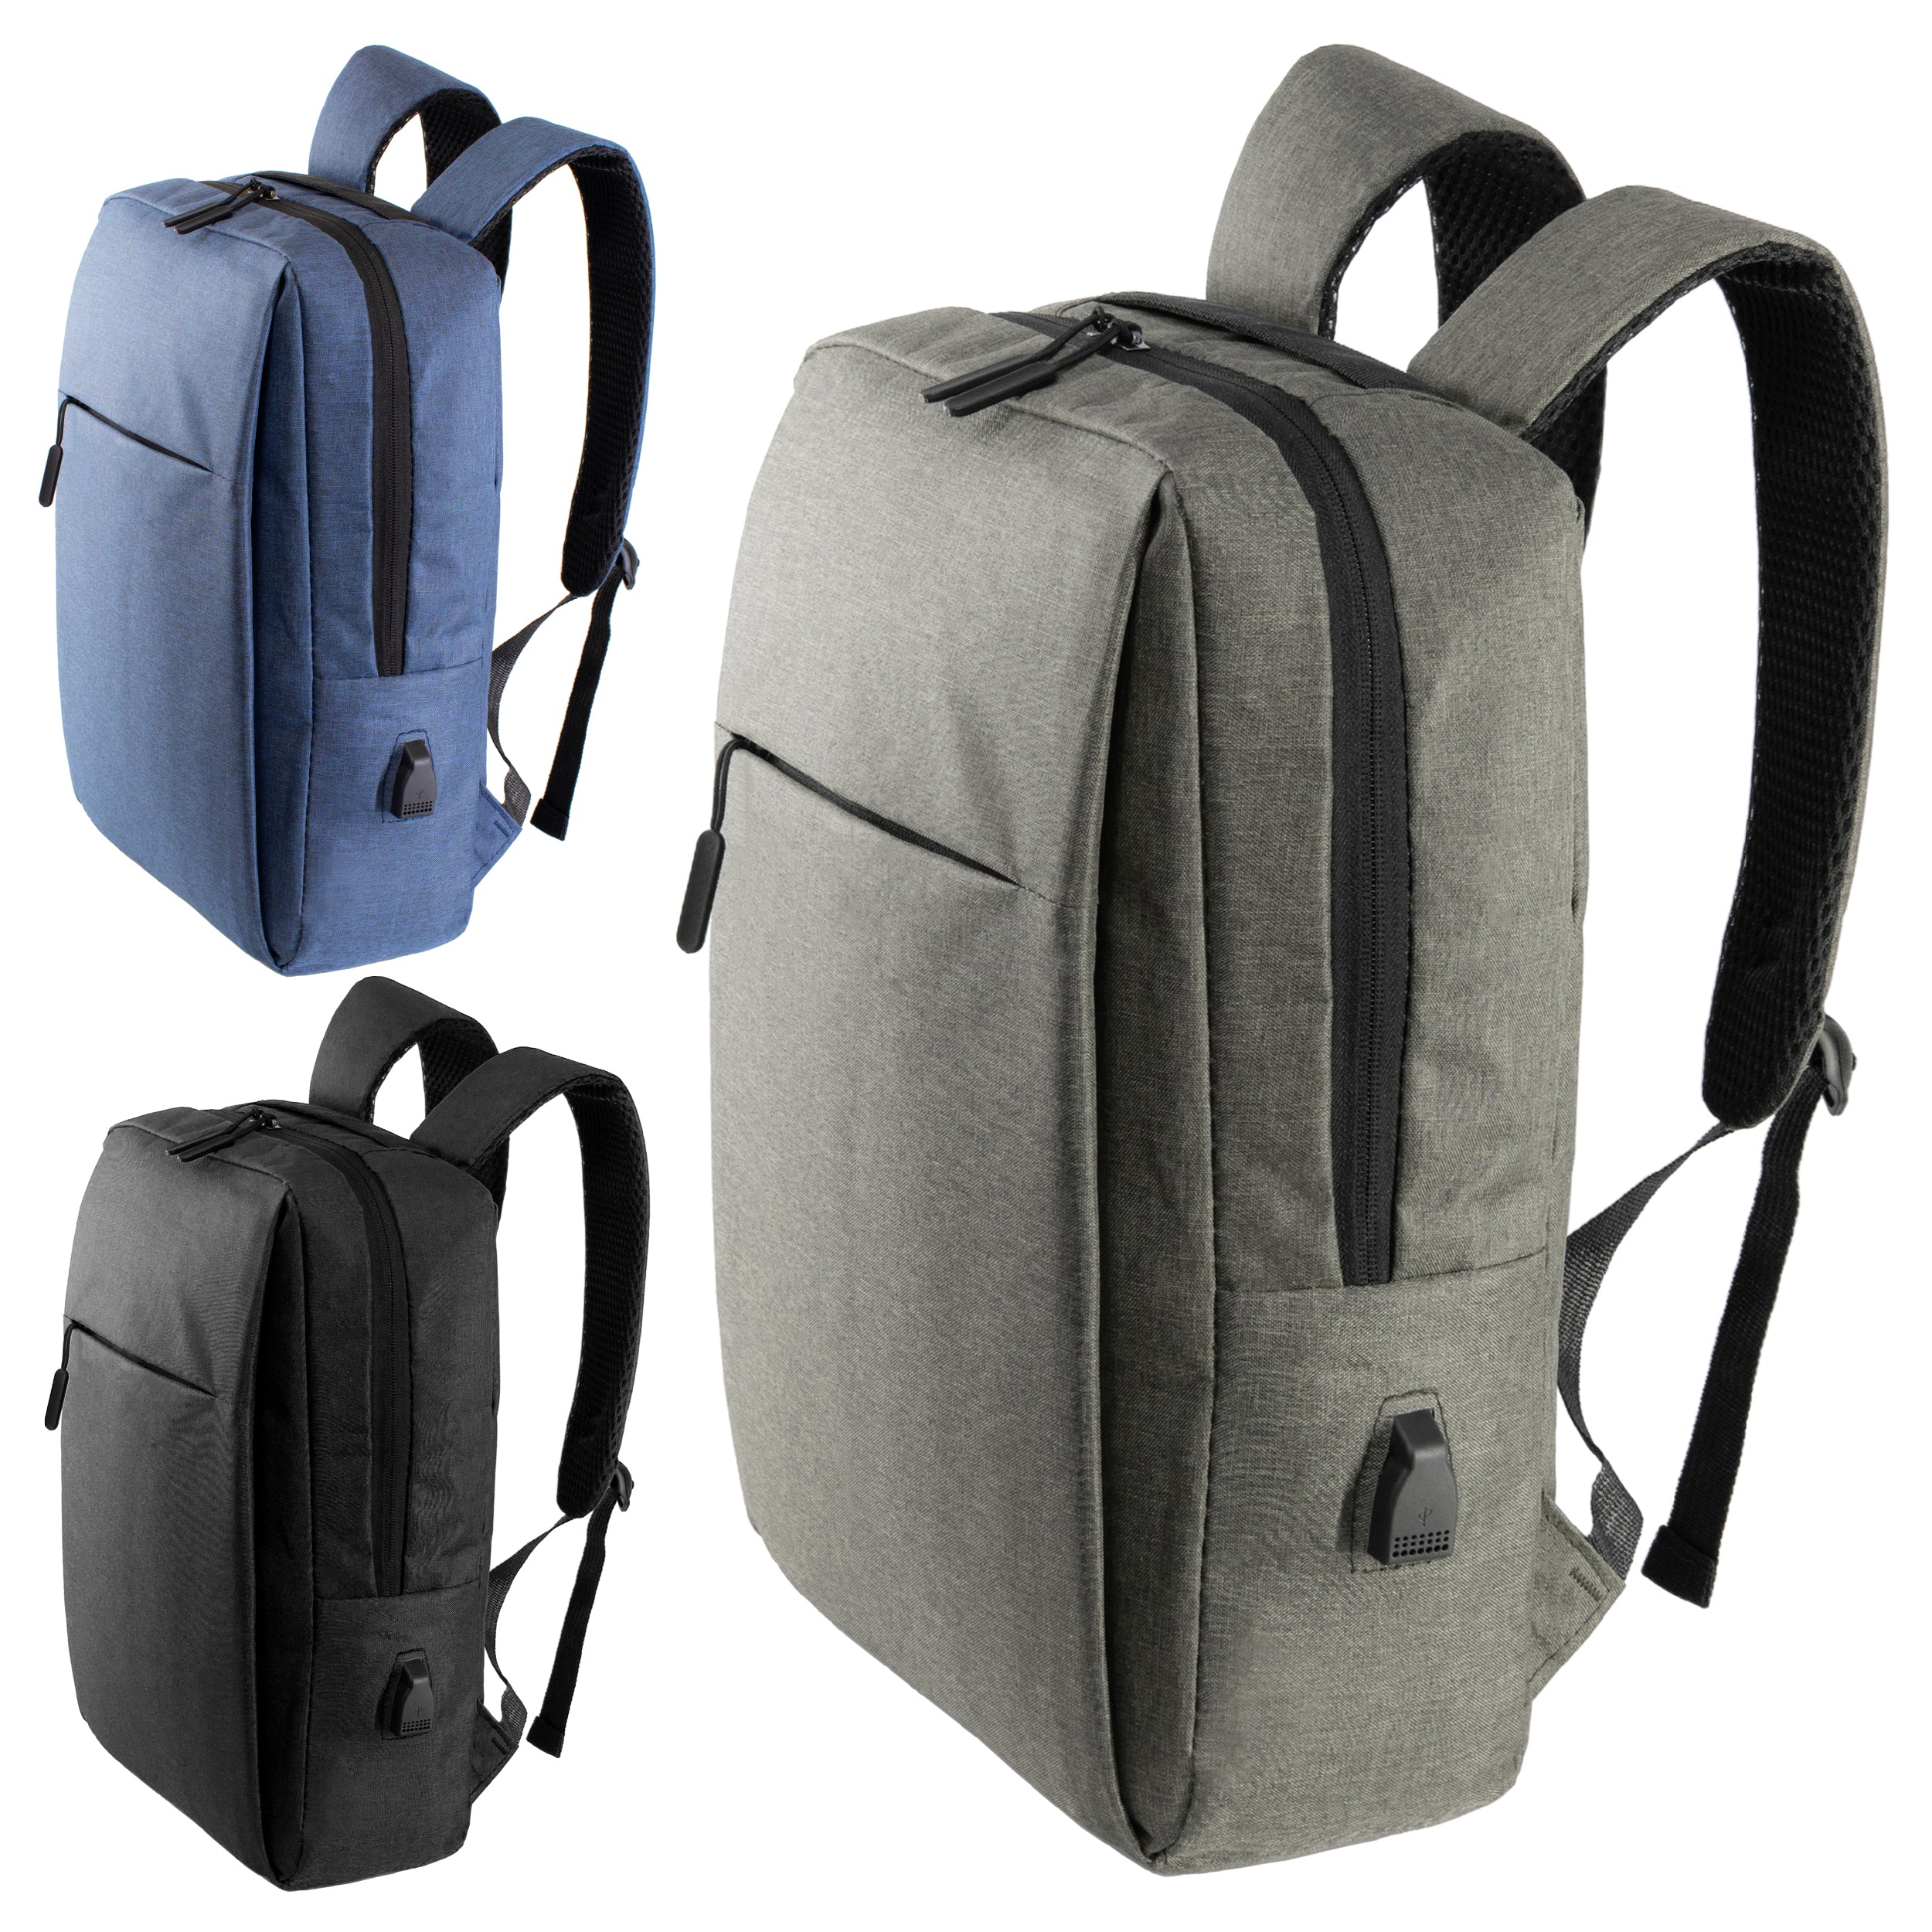 17" Wholesale Premium Design Backpacks in 3 Assorted Colors - Wholesale Bookbags Case of 24